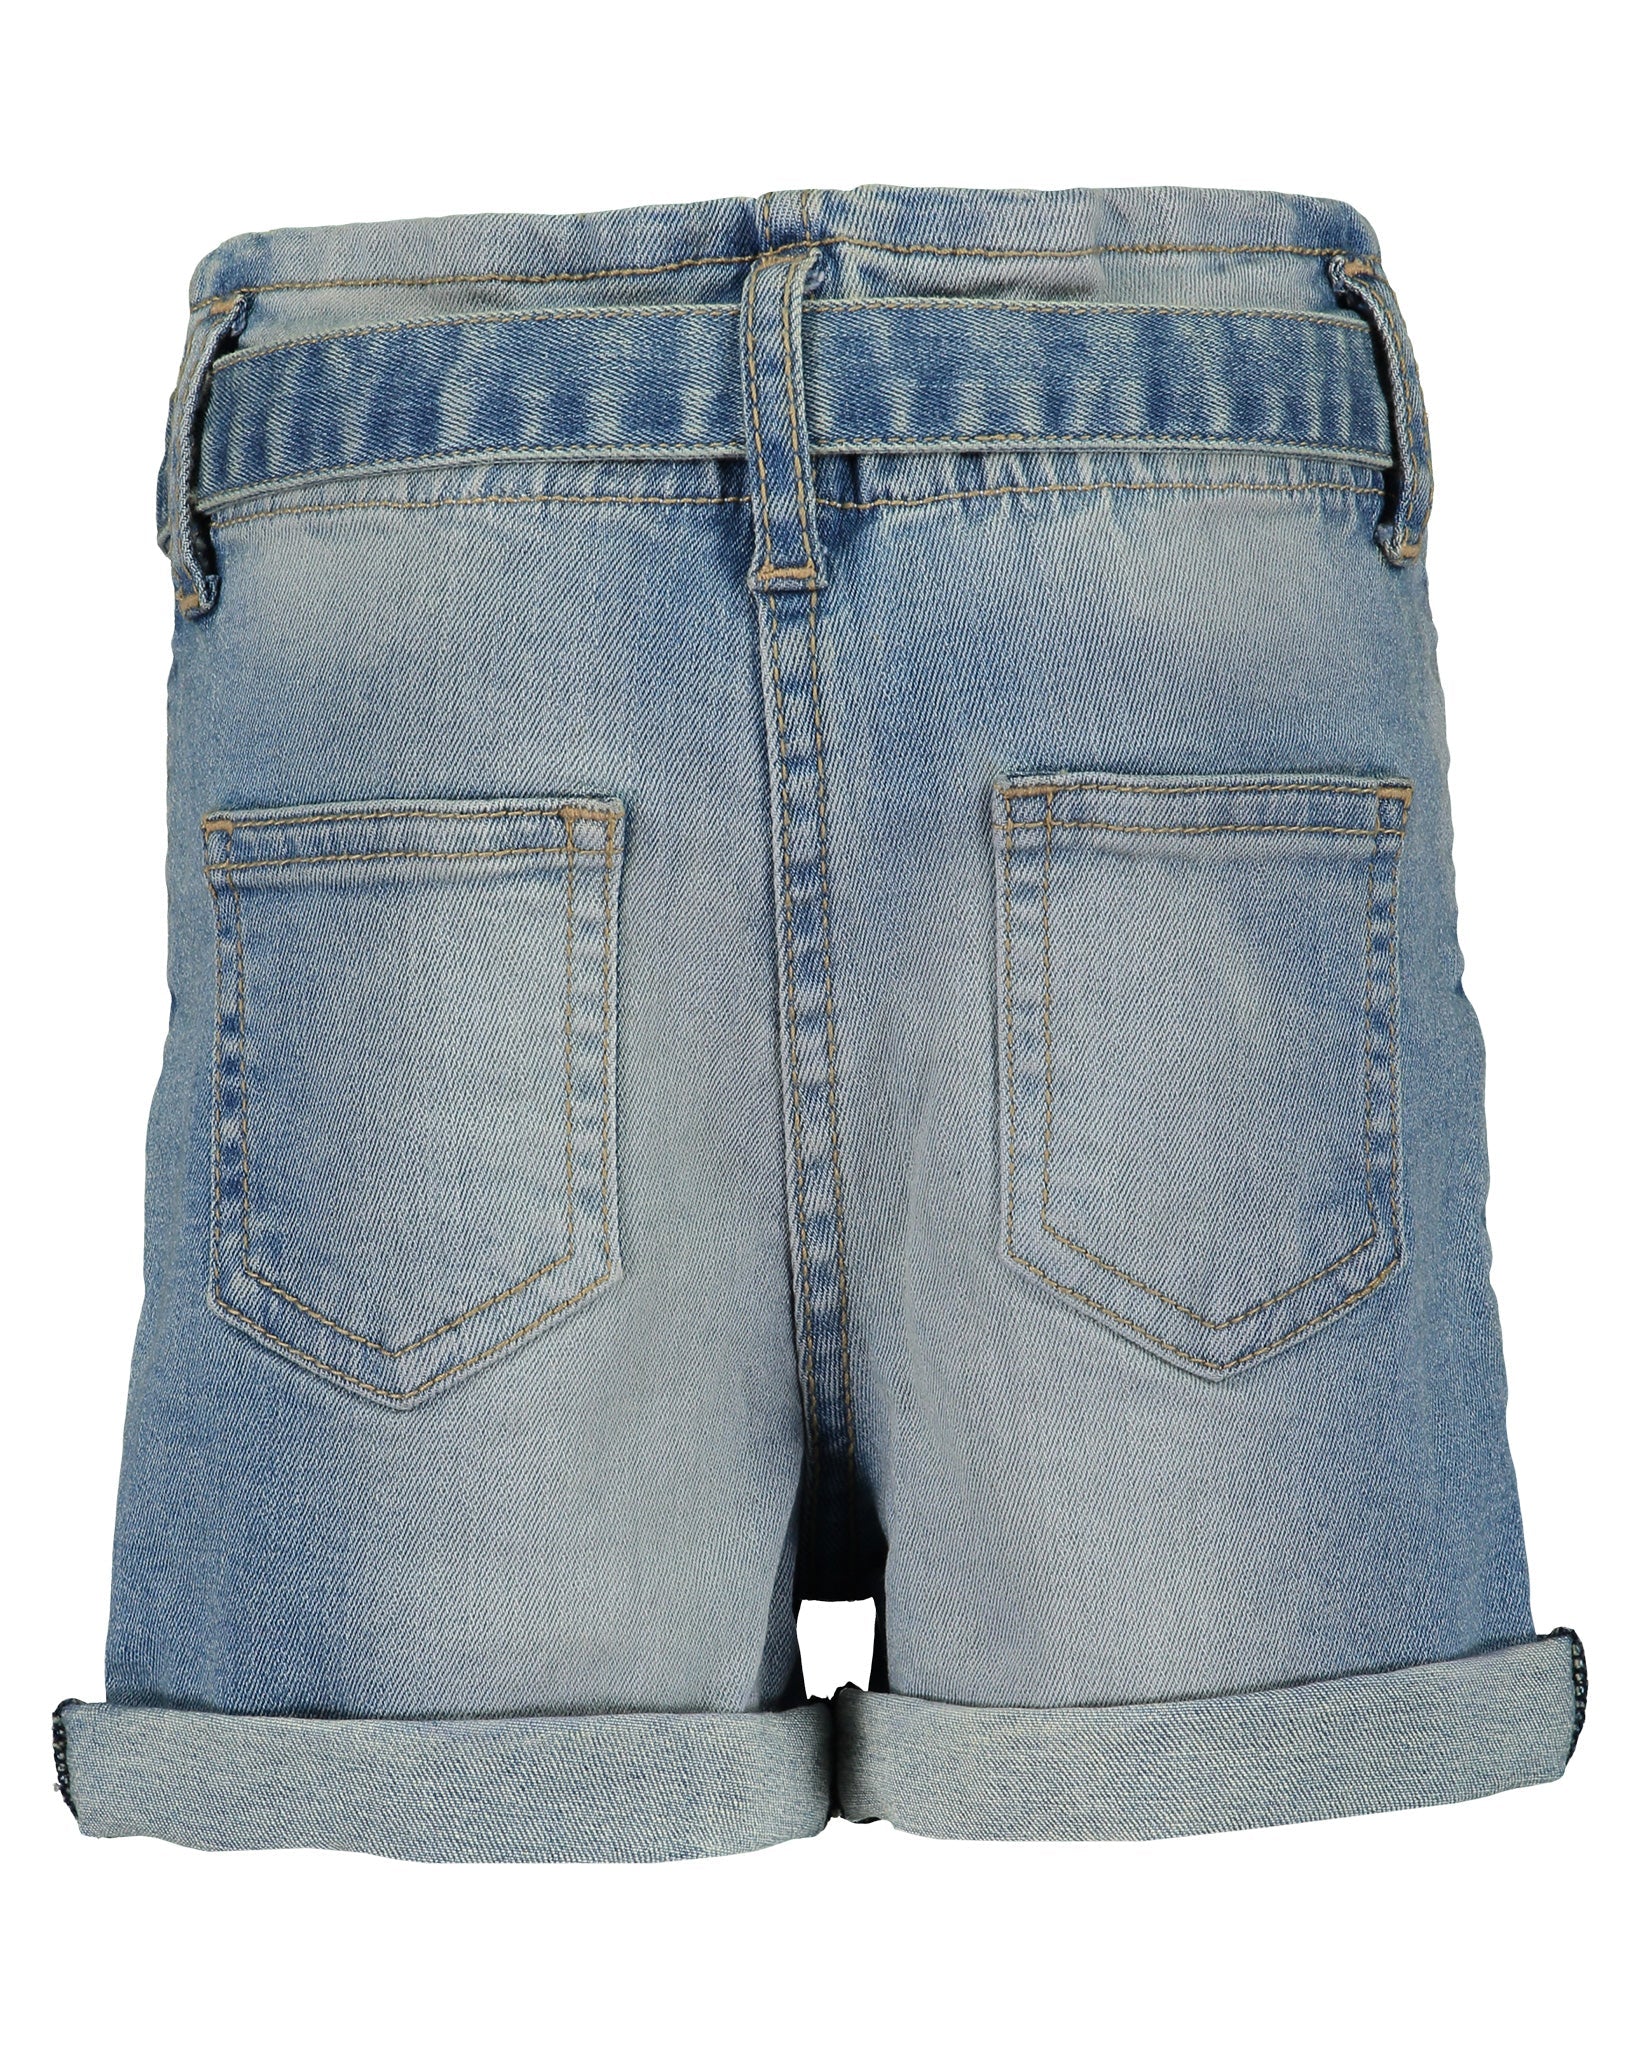 Girls Woven Jeans Shorts - Nana B Baby & Childrenswear Boutique